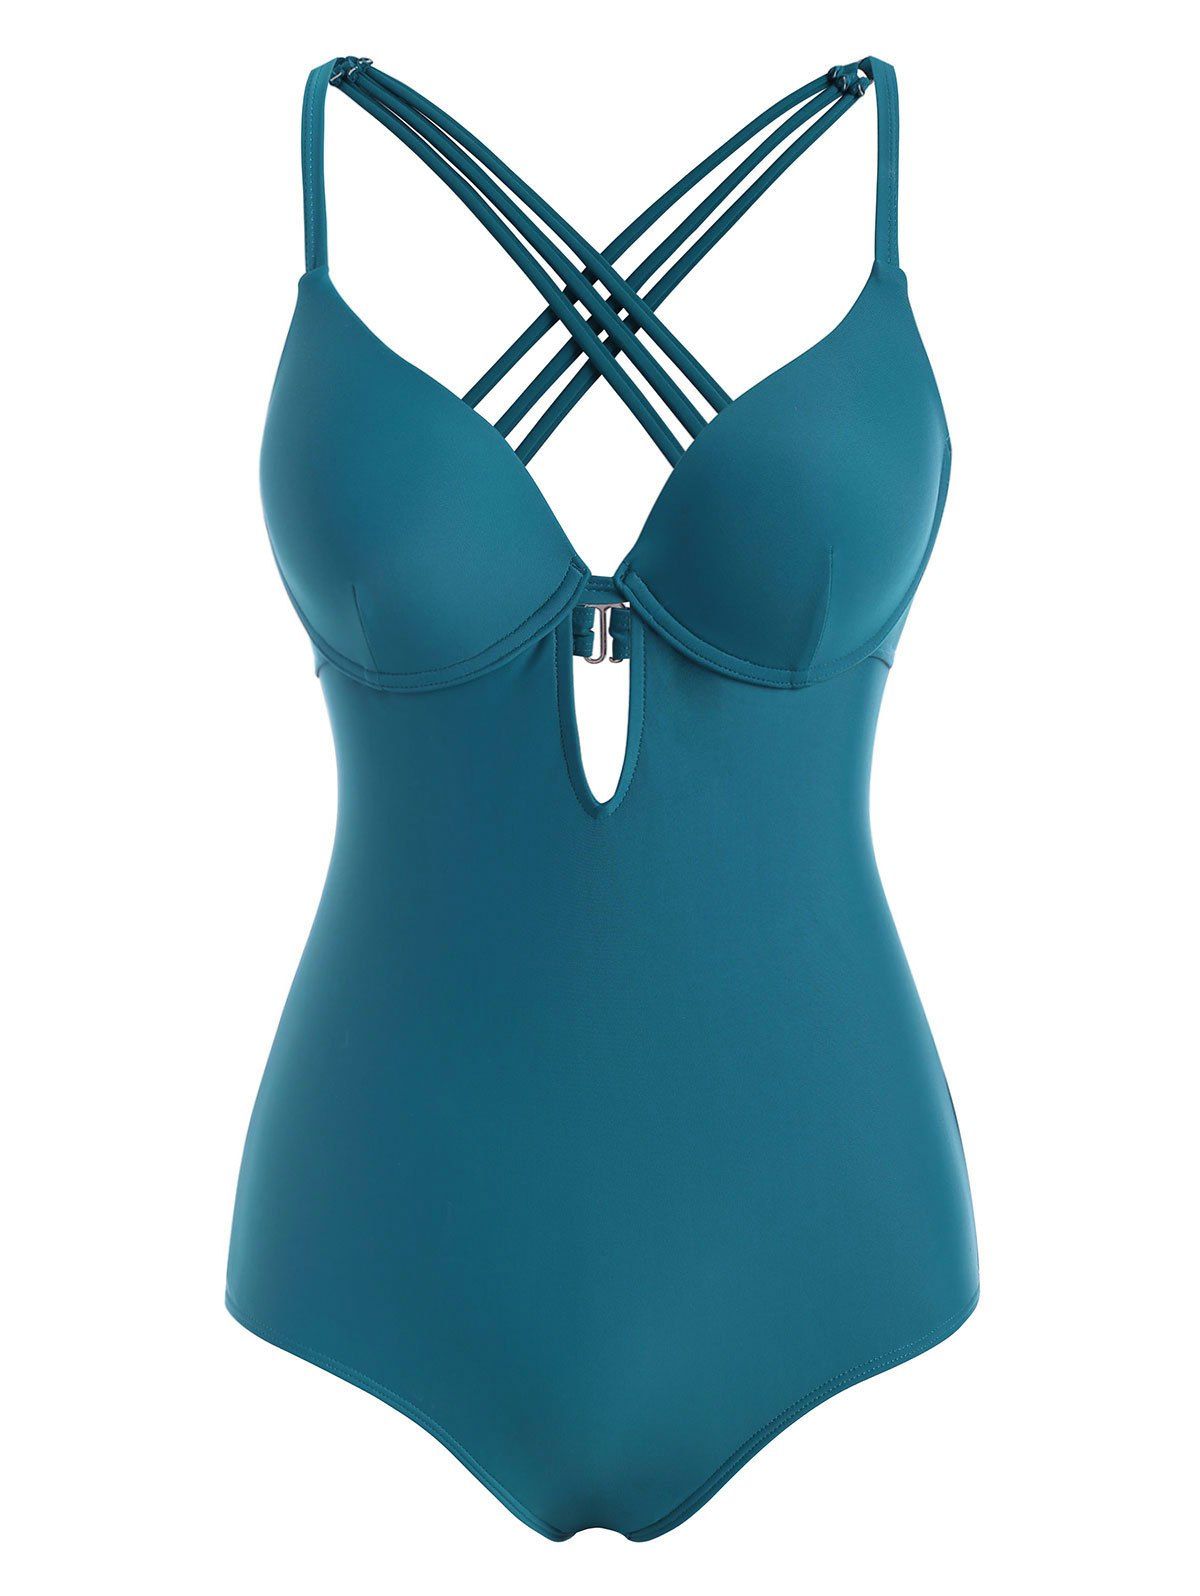 Criss Cross Cut Out Swimsuit Underwire Keyhole Push Up One-piece Swimsuit - BLUE L